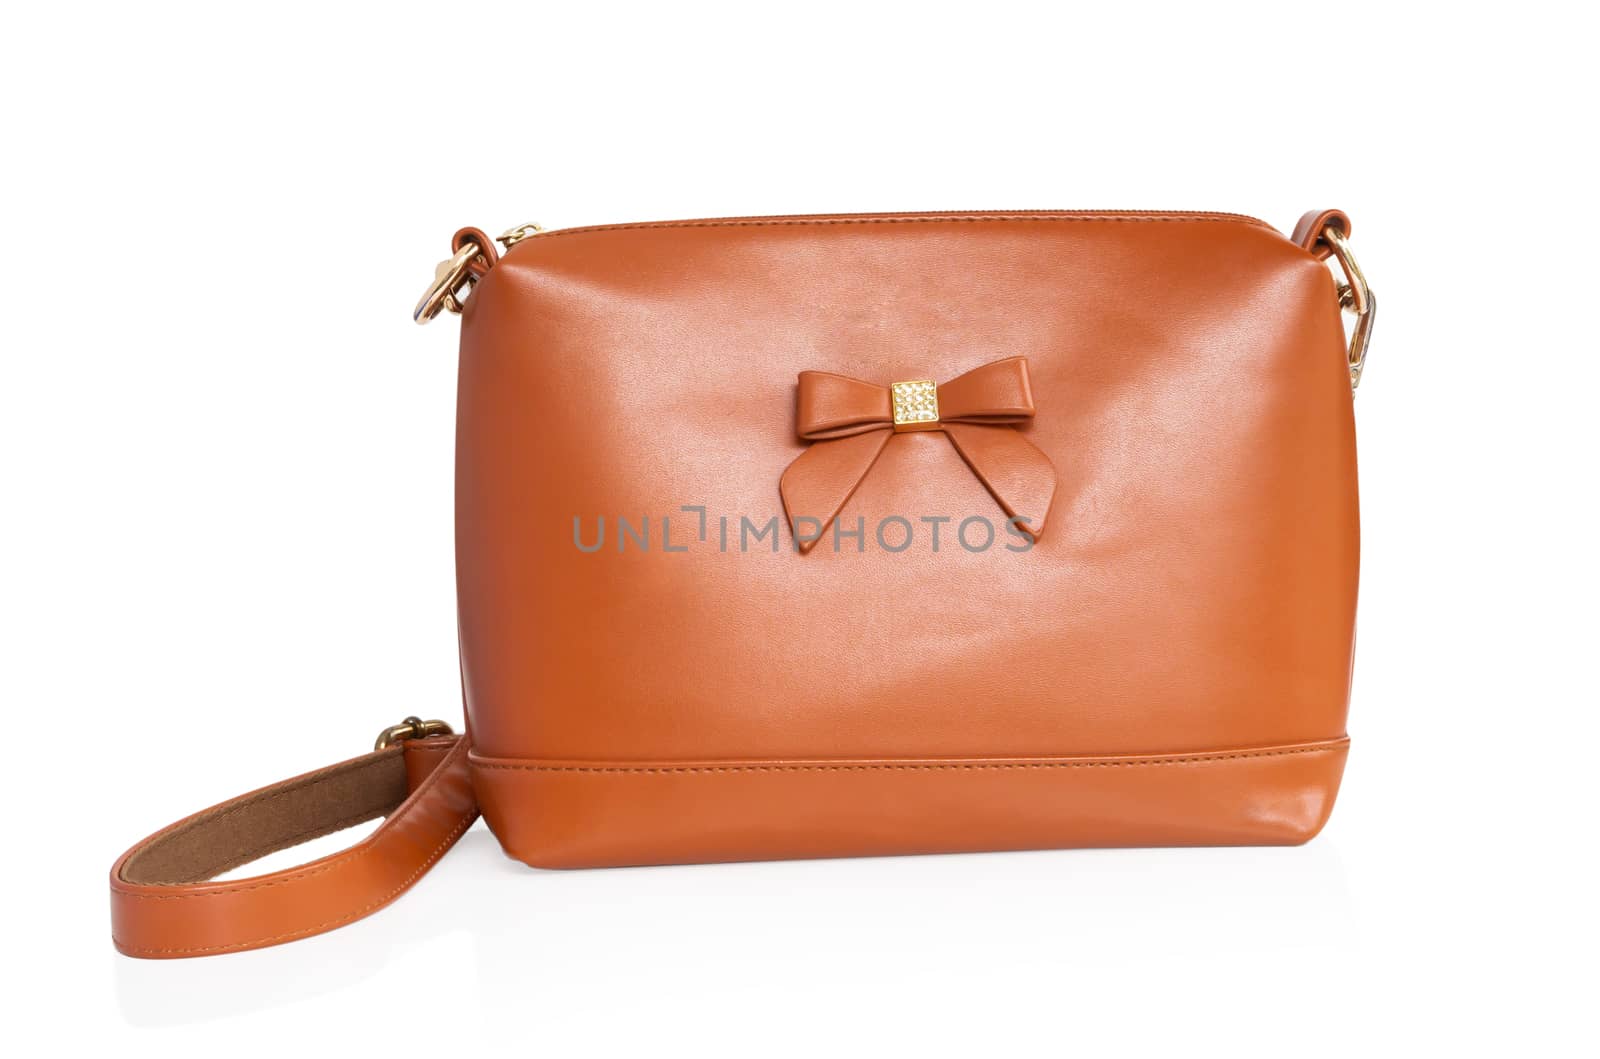 Closeup orange leather bag on white background by pt.pongsak@gmail.com